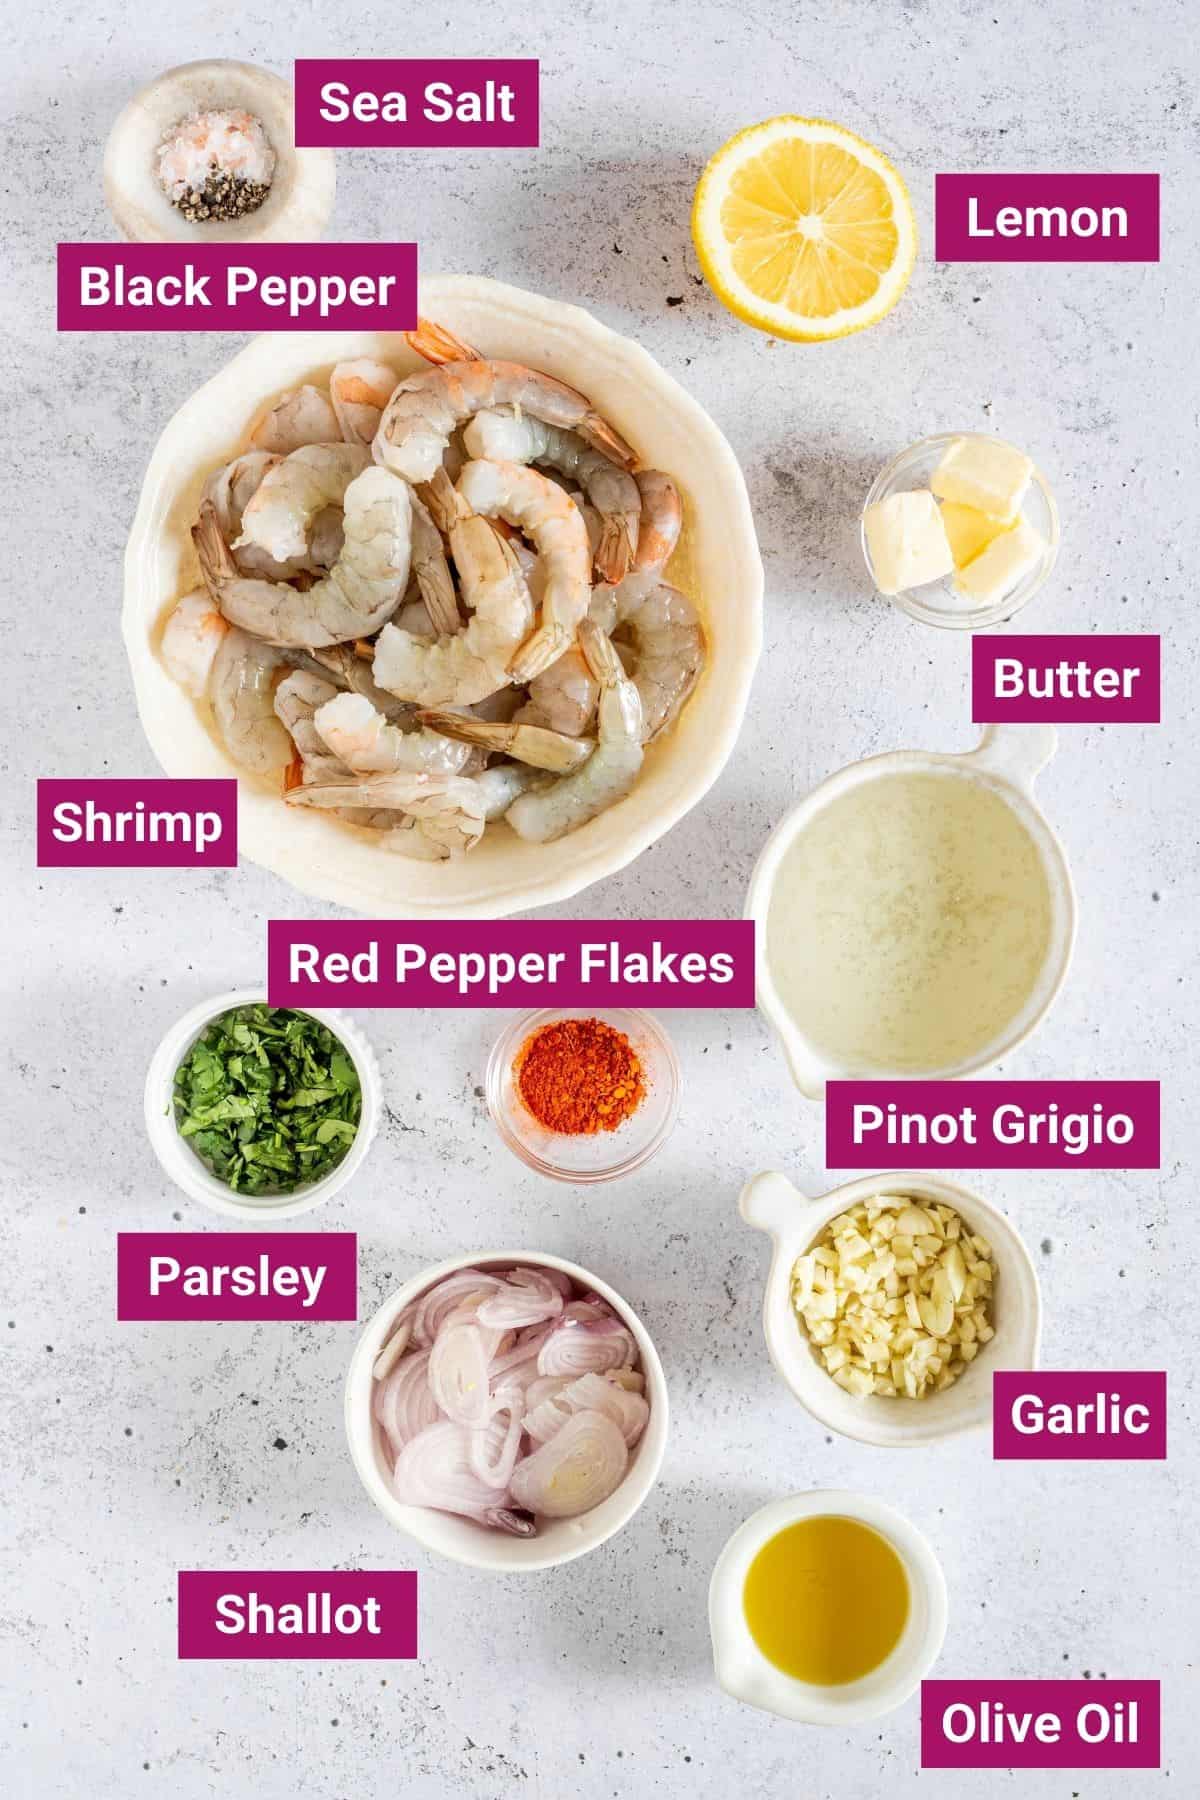 condiments, shrimp, garlic, shallots, lemon, pinot grigio on separate bowls